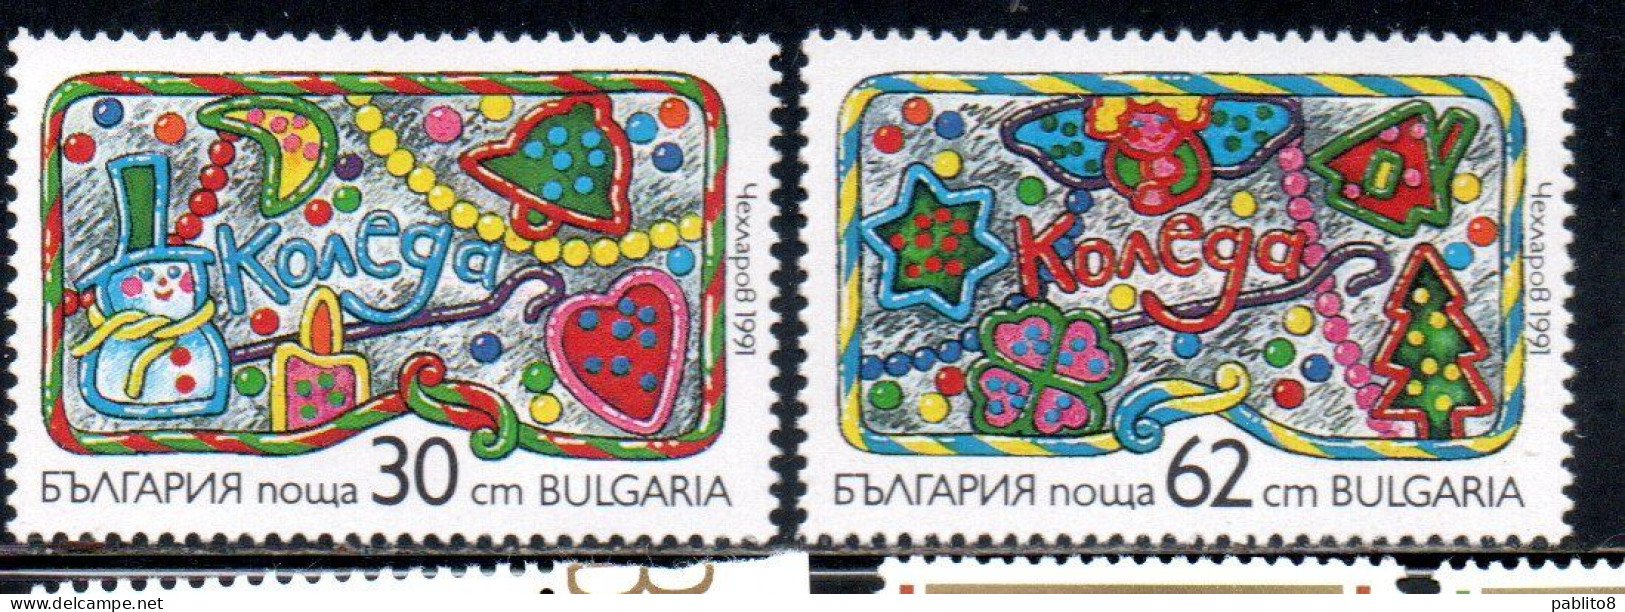 BULGARIA BULGARIE BULGARIEN 1991 CHRISTMAS NATALE NOEL WEIHNACHTEN NAVIDAD COMPLETE SET SERIE COMPLETA MNH - Ungebraucht